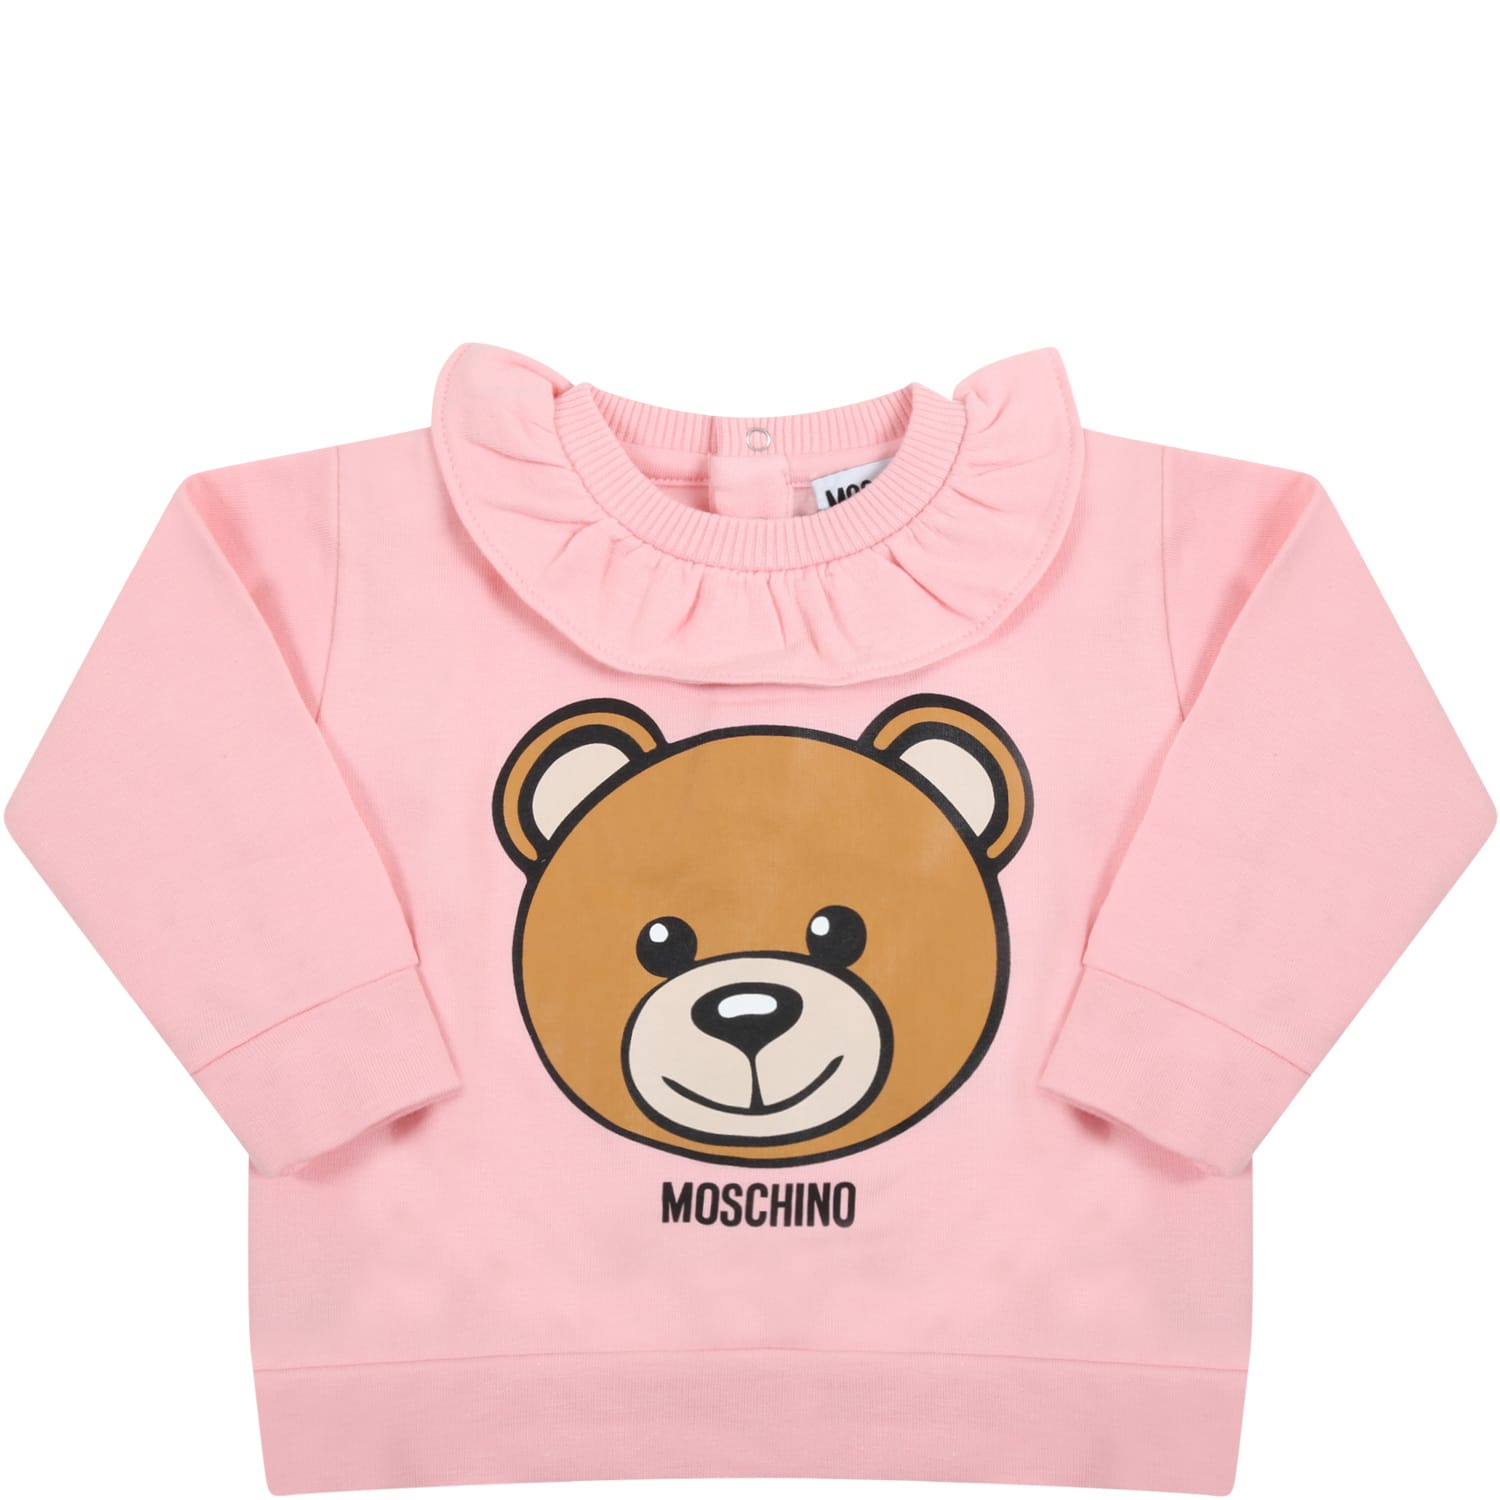 Moschino Pink Sweatshirt For Baby Girl With Teddy Bear